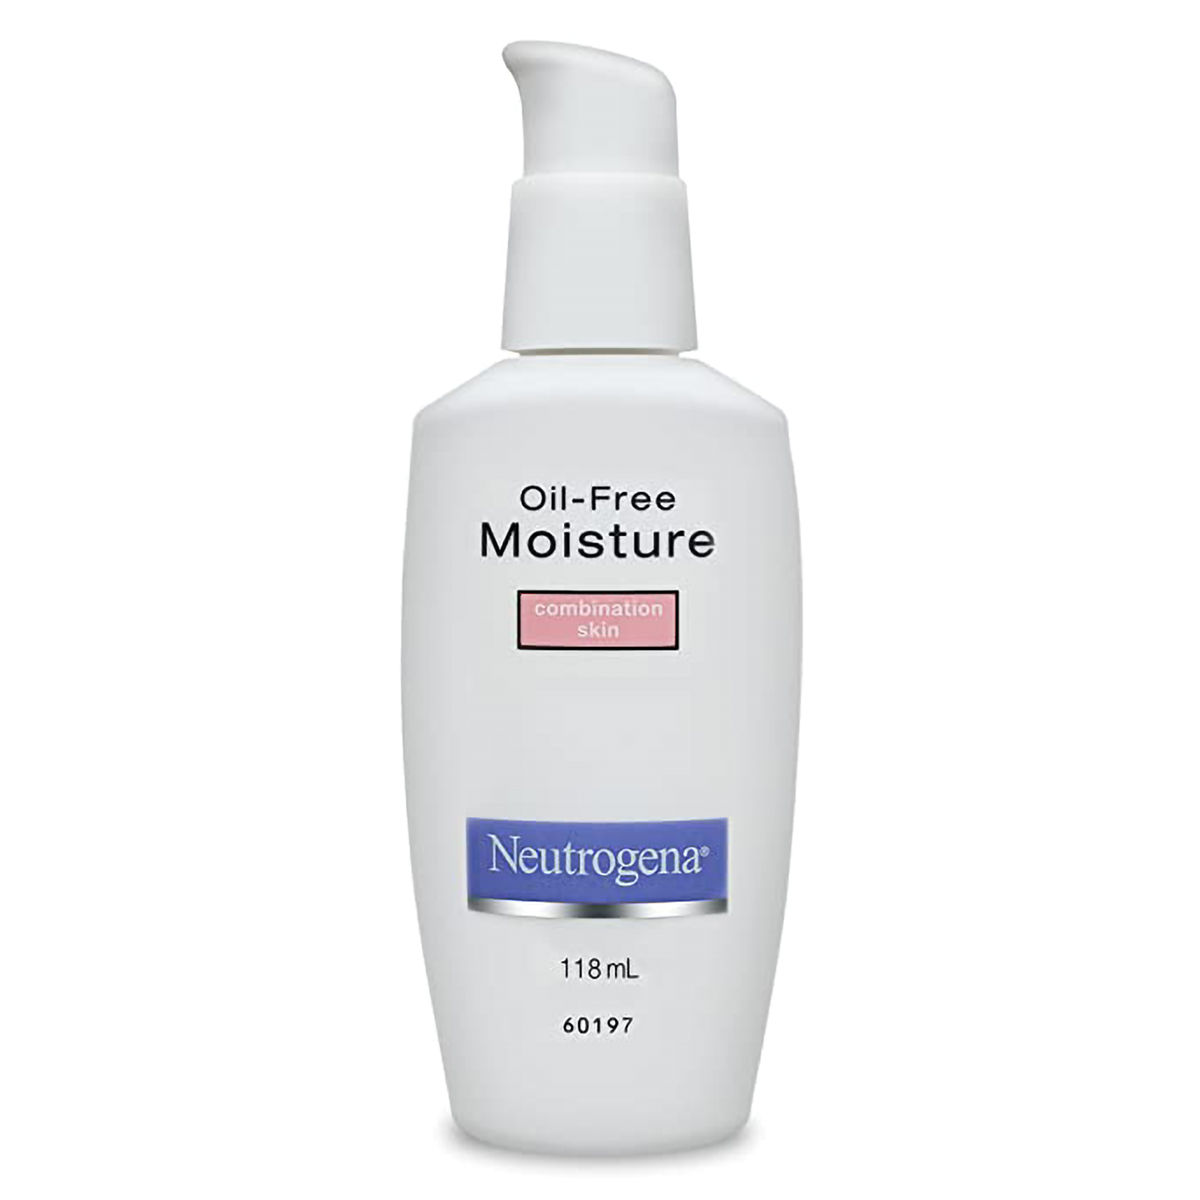 Buy Neutrogena Oil-Free Moisture Combination Skin, 118 ml Online